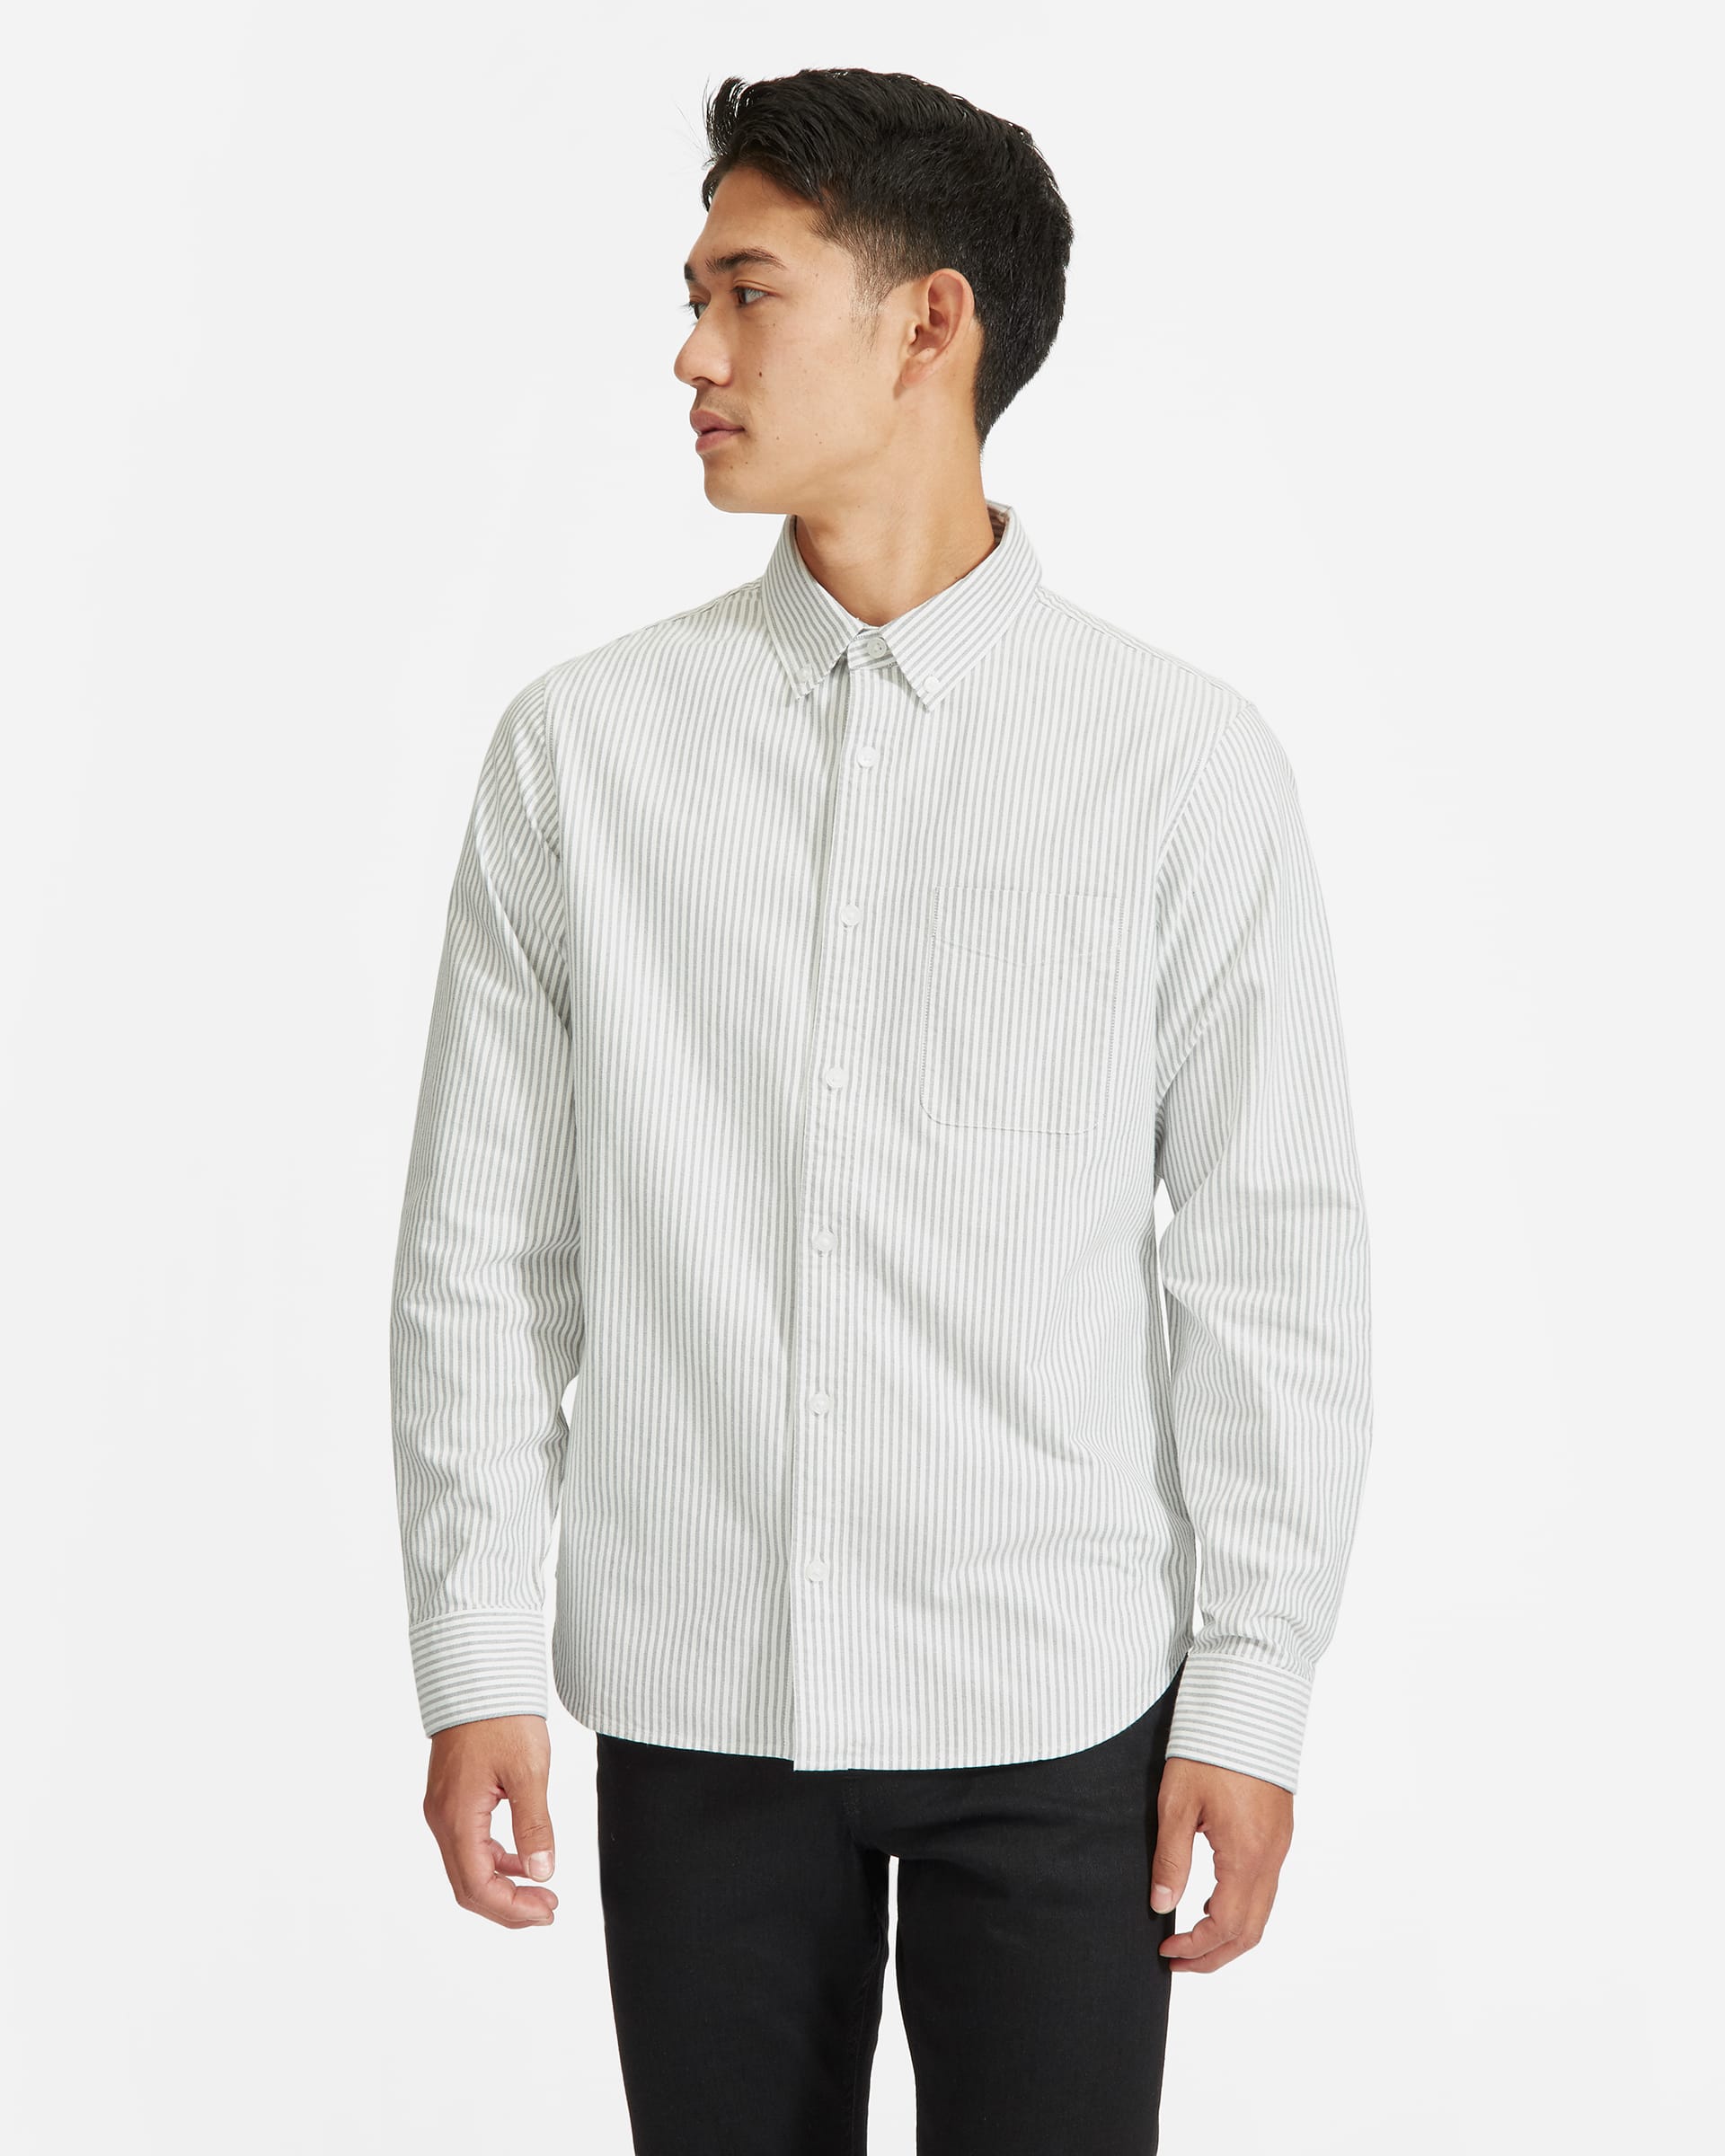 The Standard Fit Japanese Oxford Shirt | Uniform White / Black Stripe ...